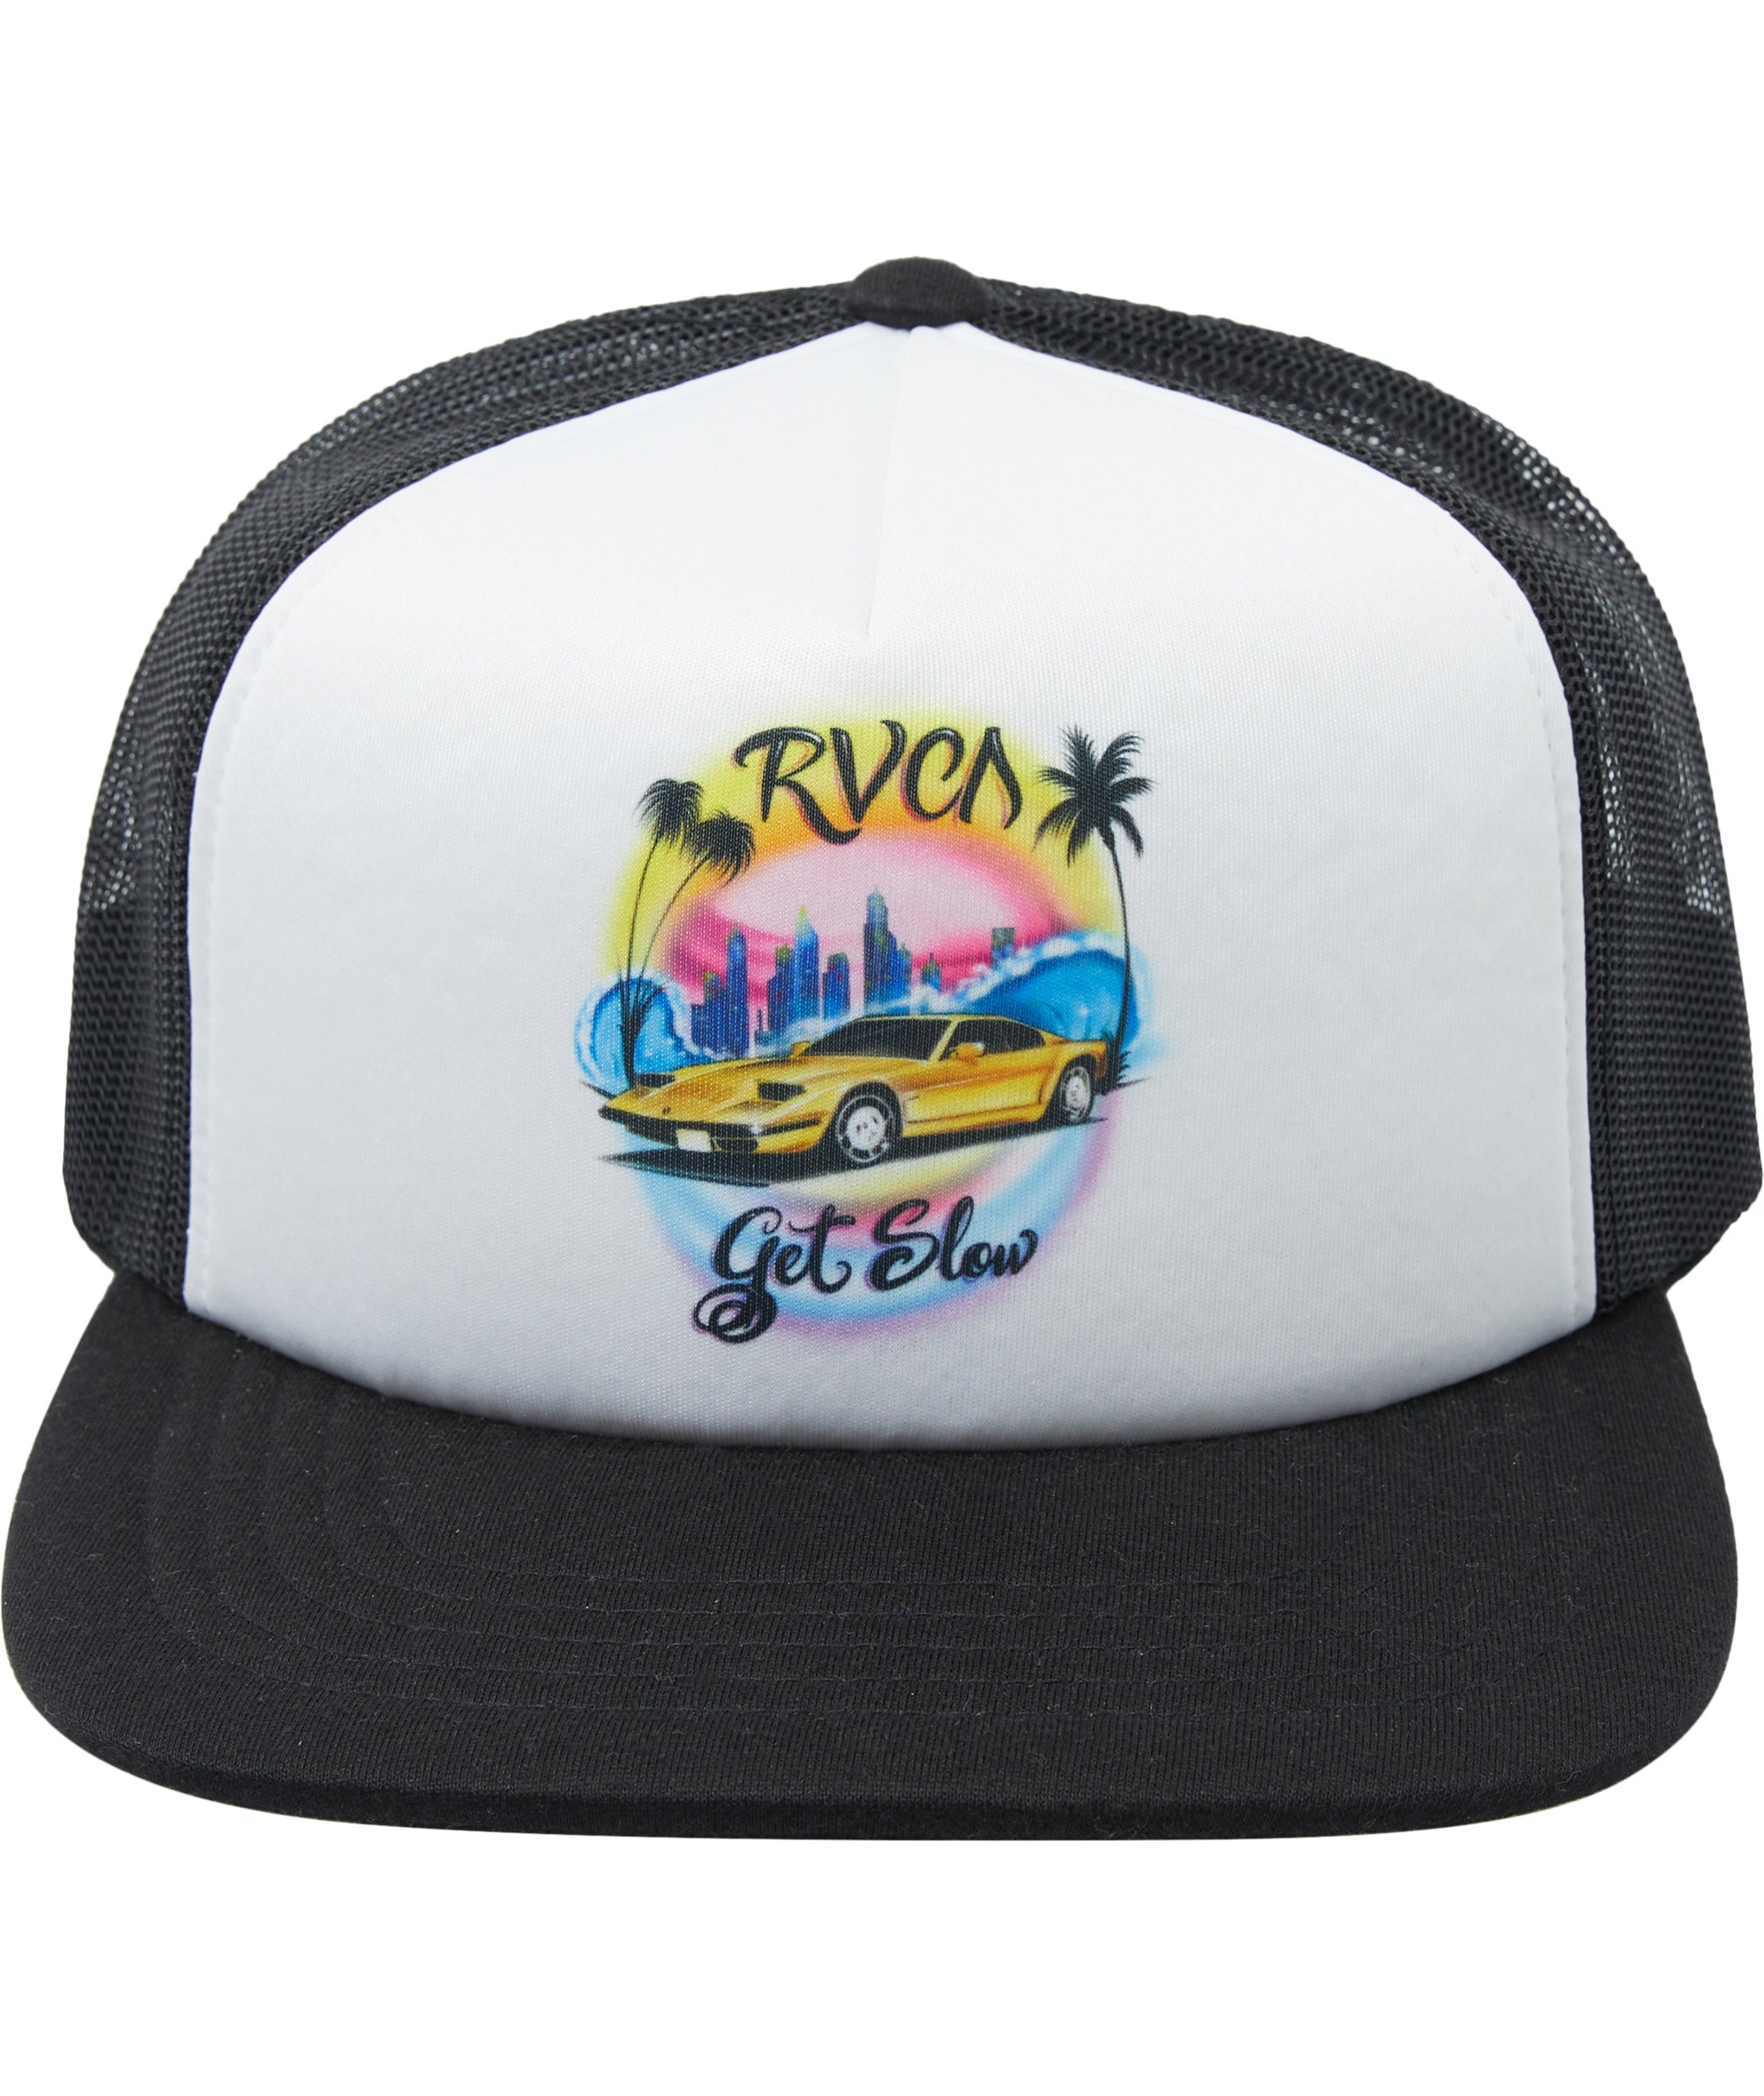 RVCA Get Slow Trucker Hat